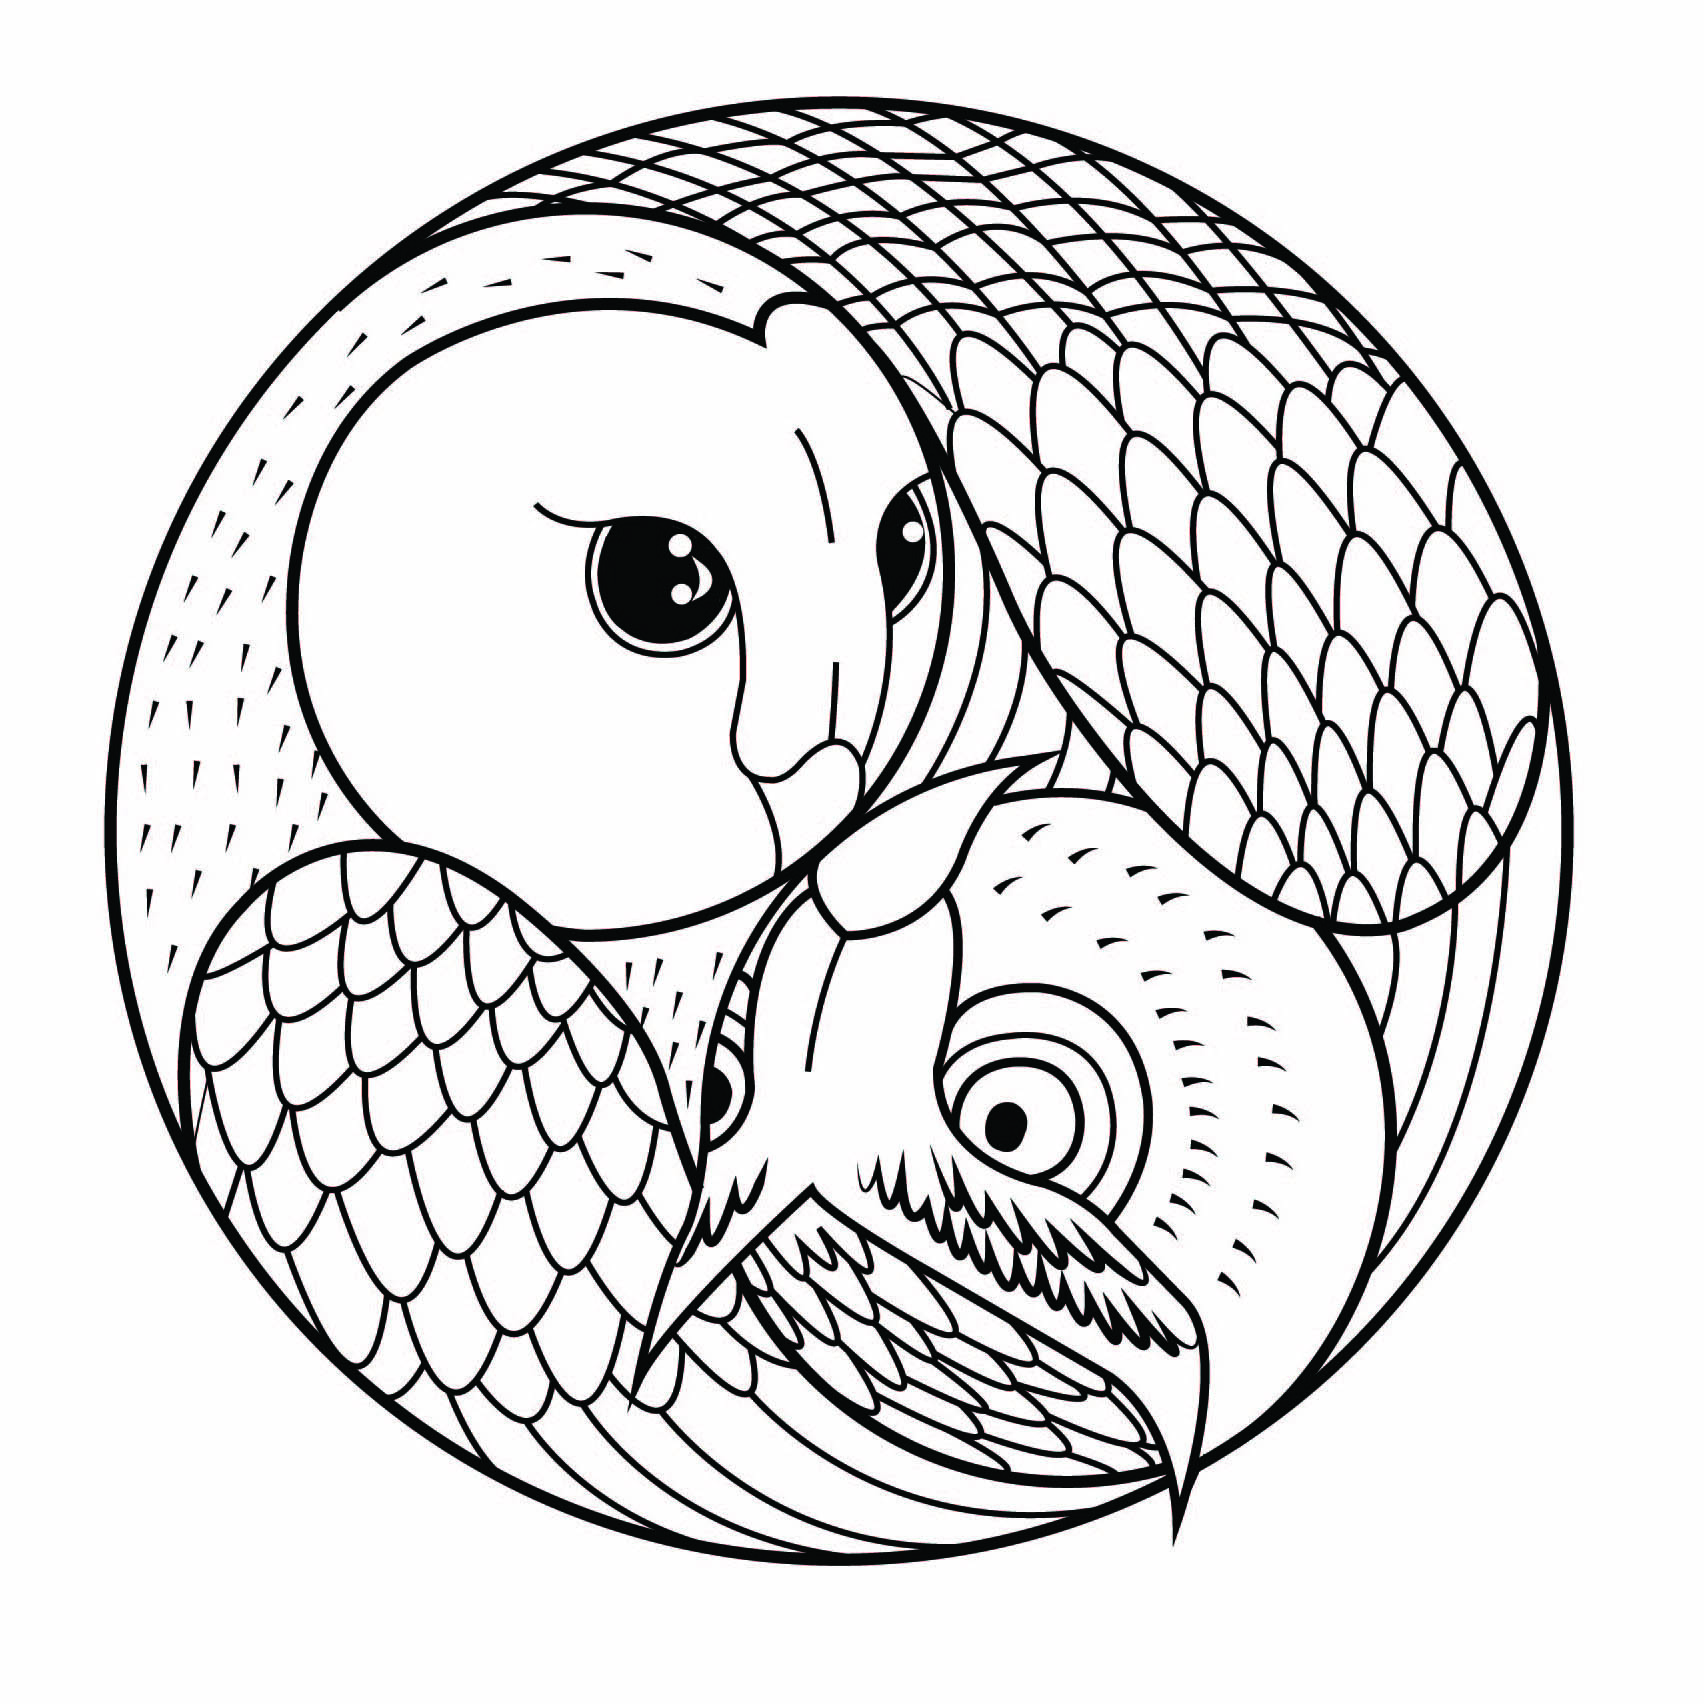 Simple Mandala with 2 Owl heads, Artist : Lucie